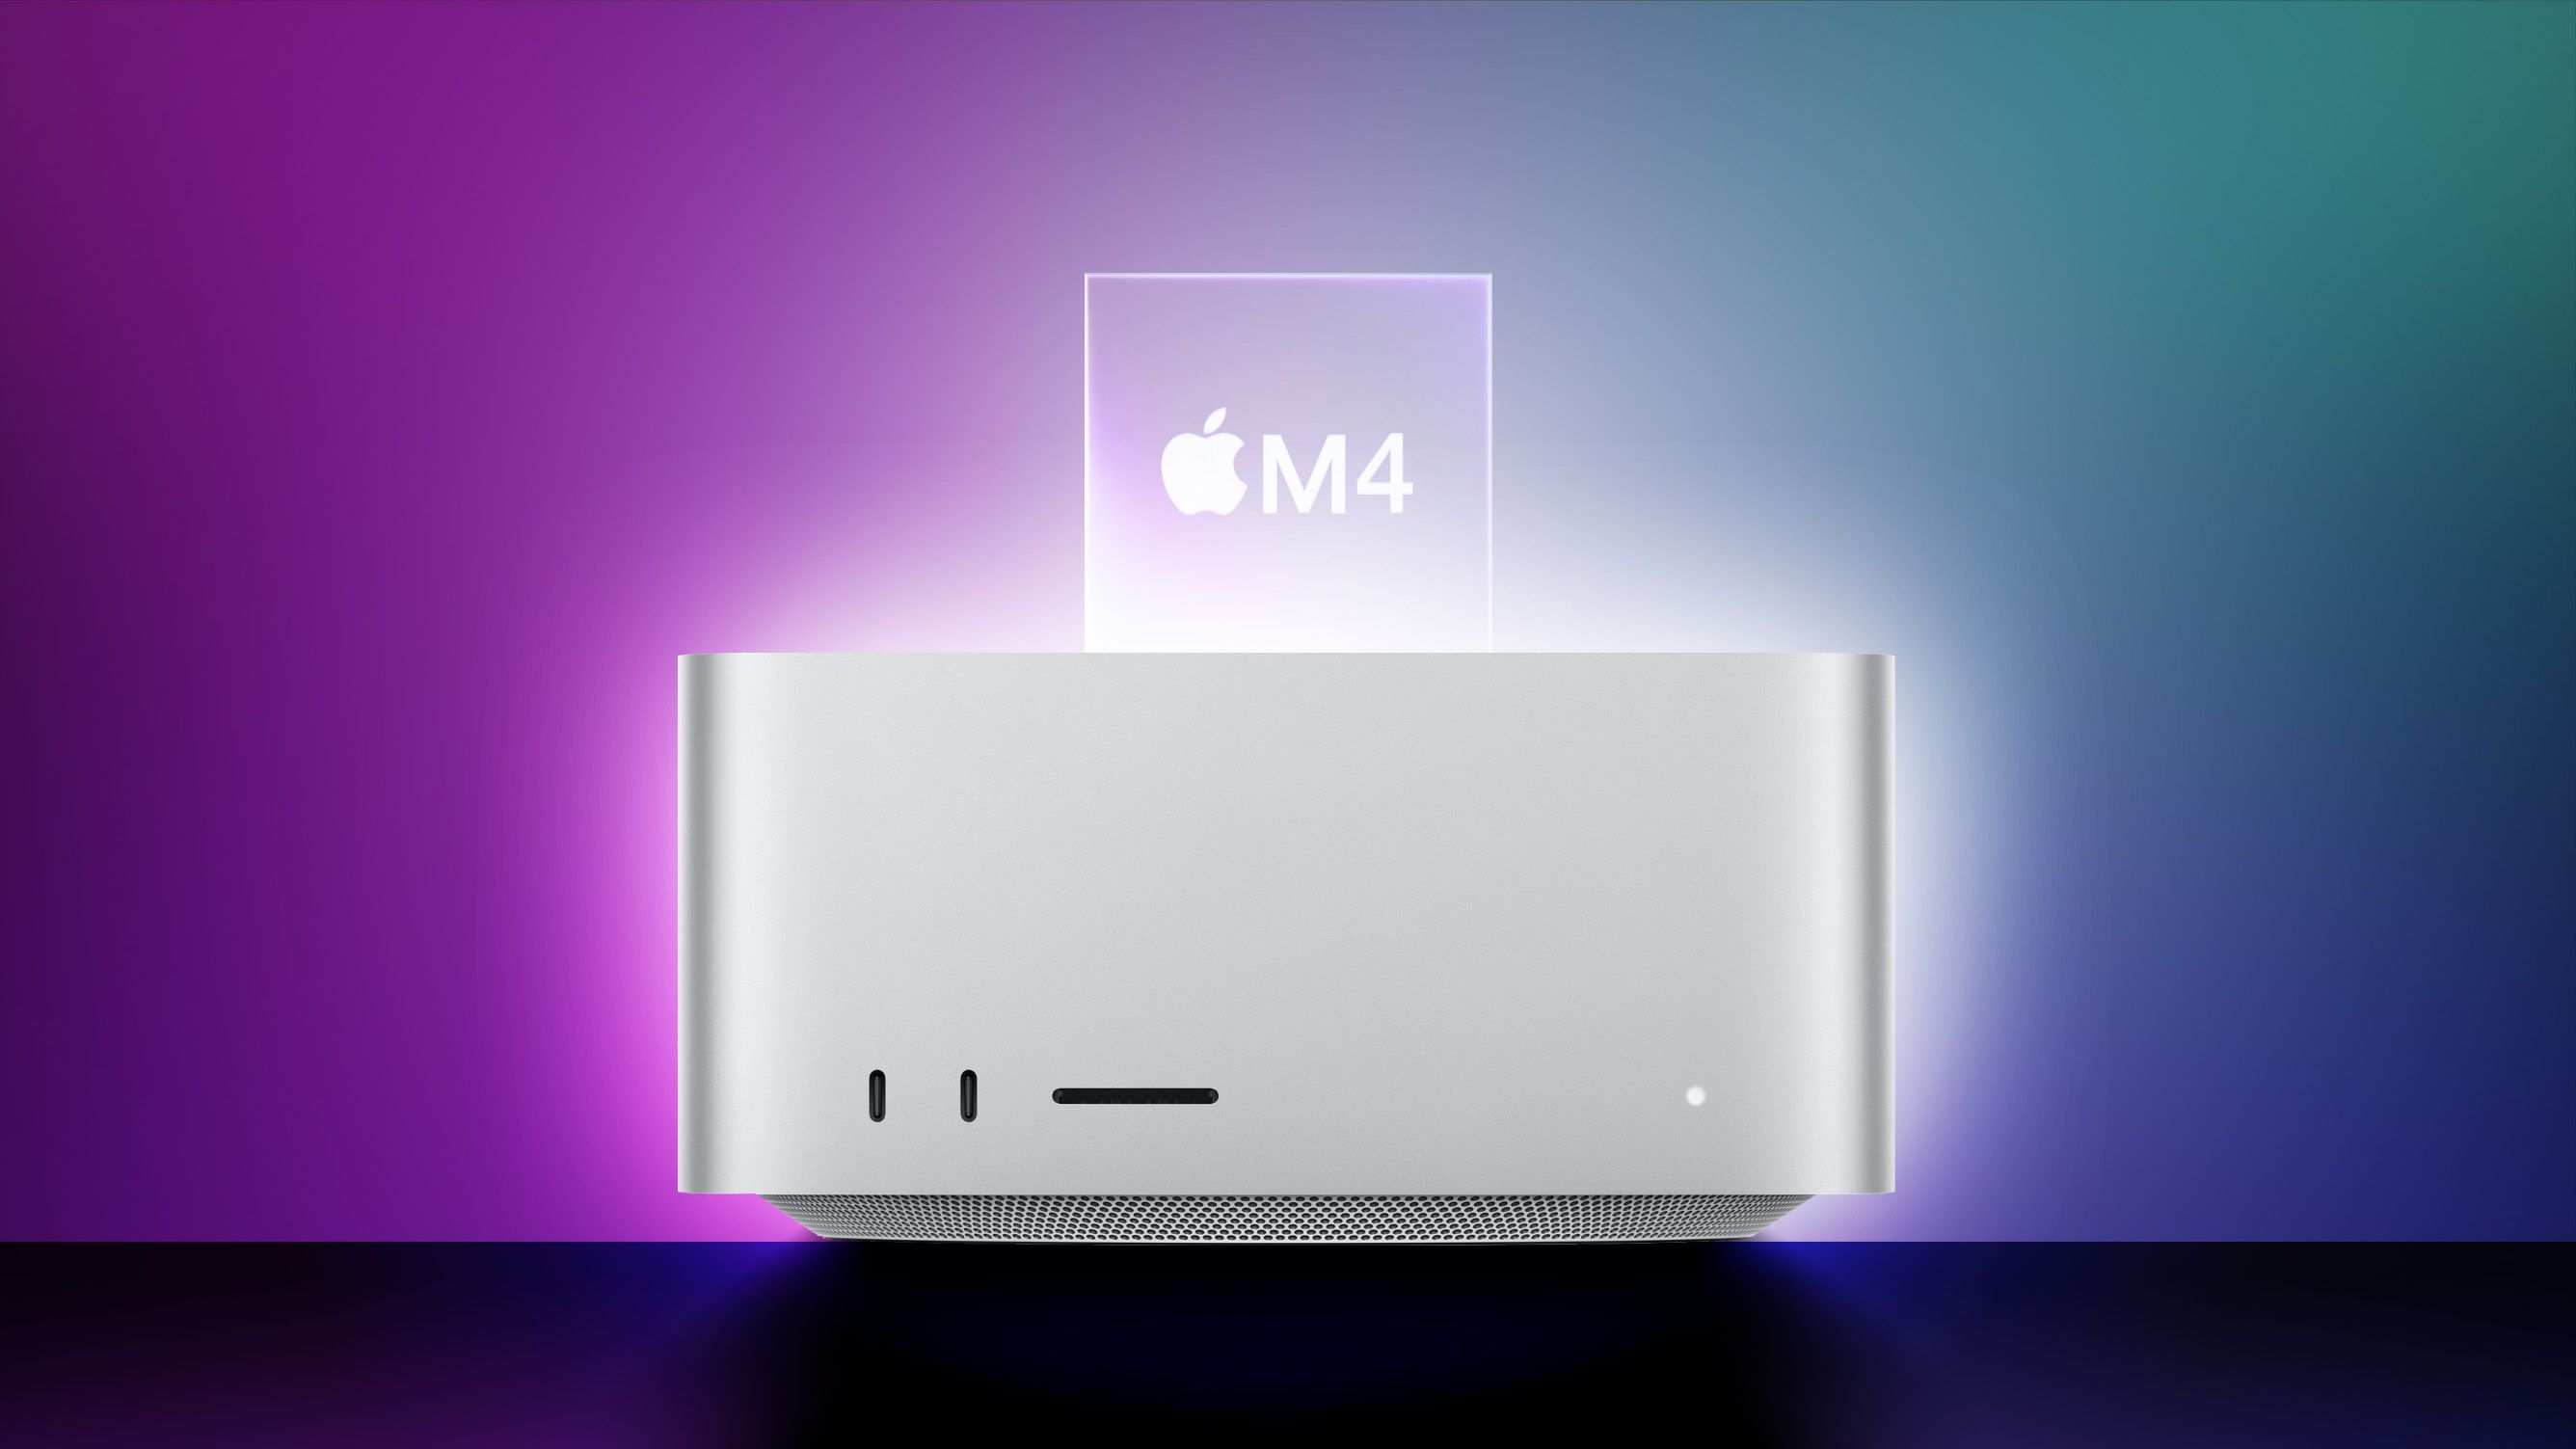 Apple's M4 Mac Studio: What We Know So Far - MacRumors